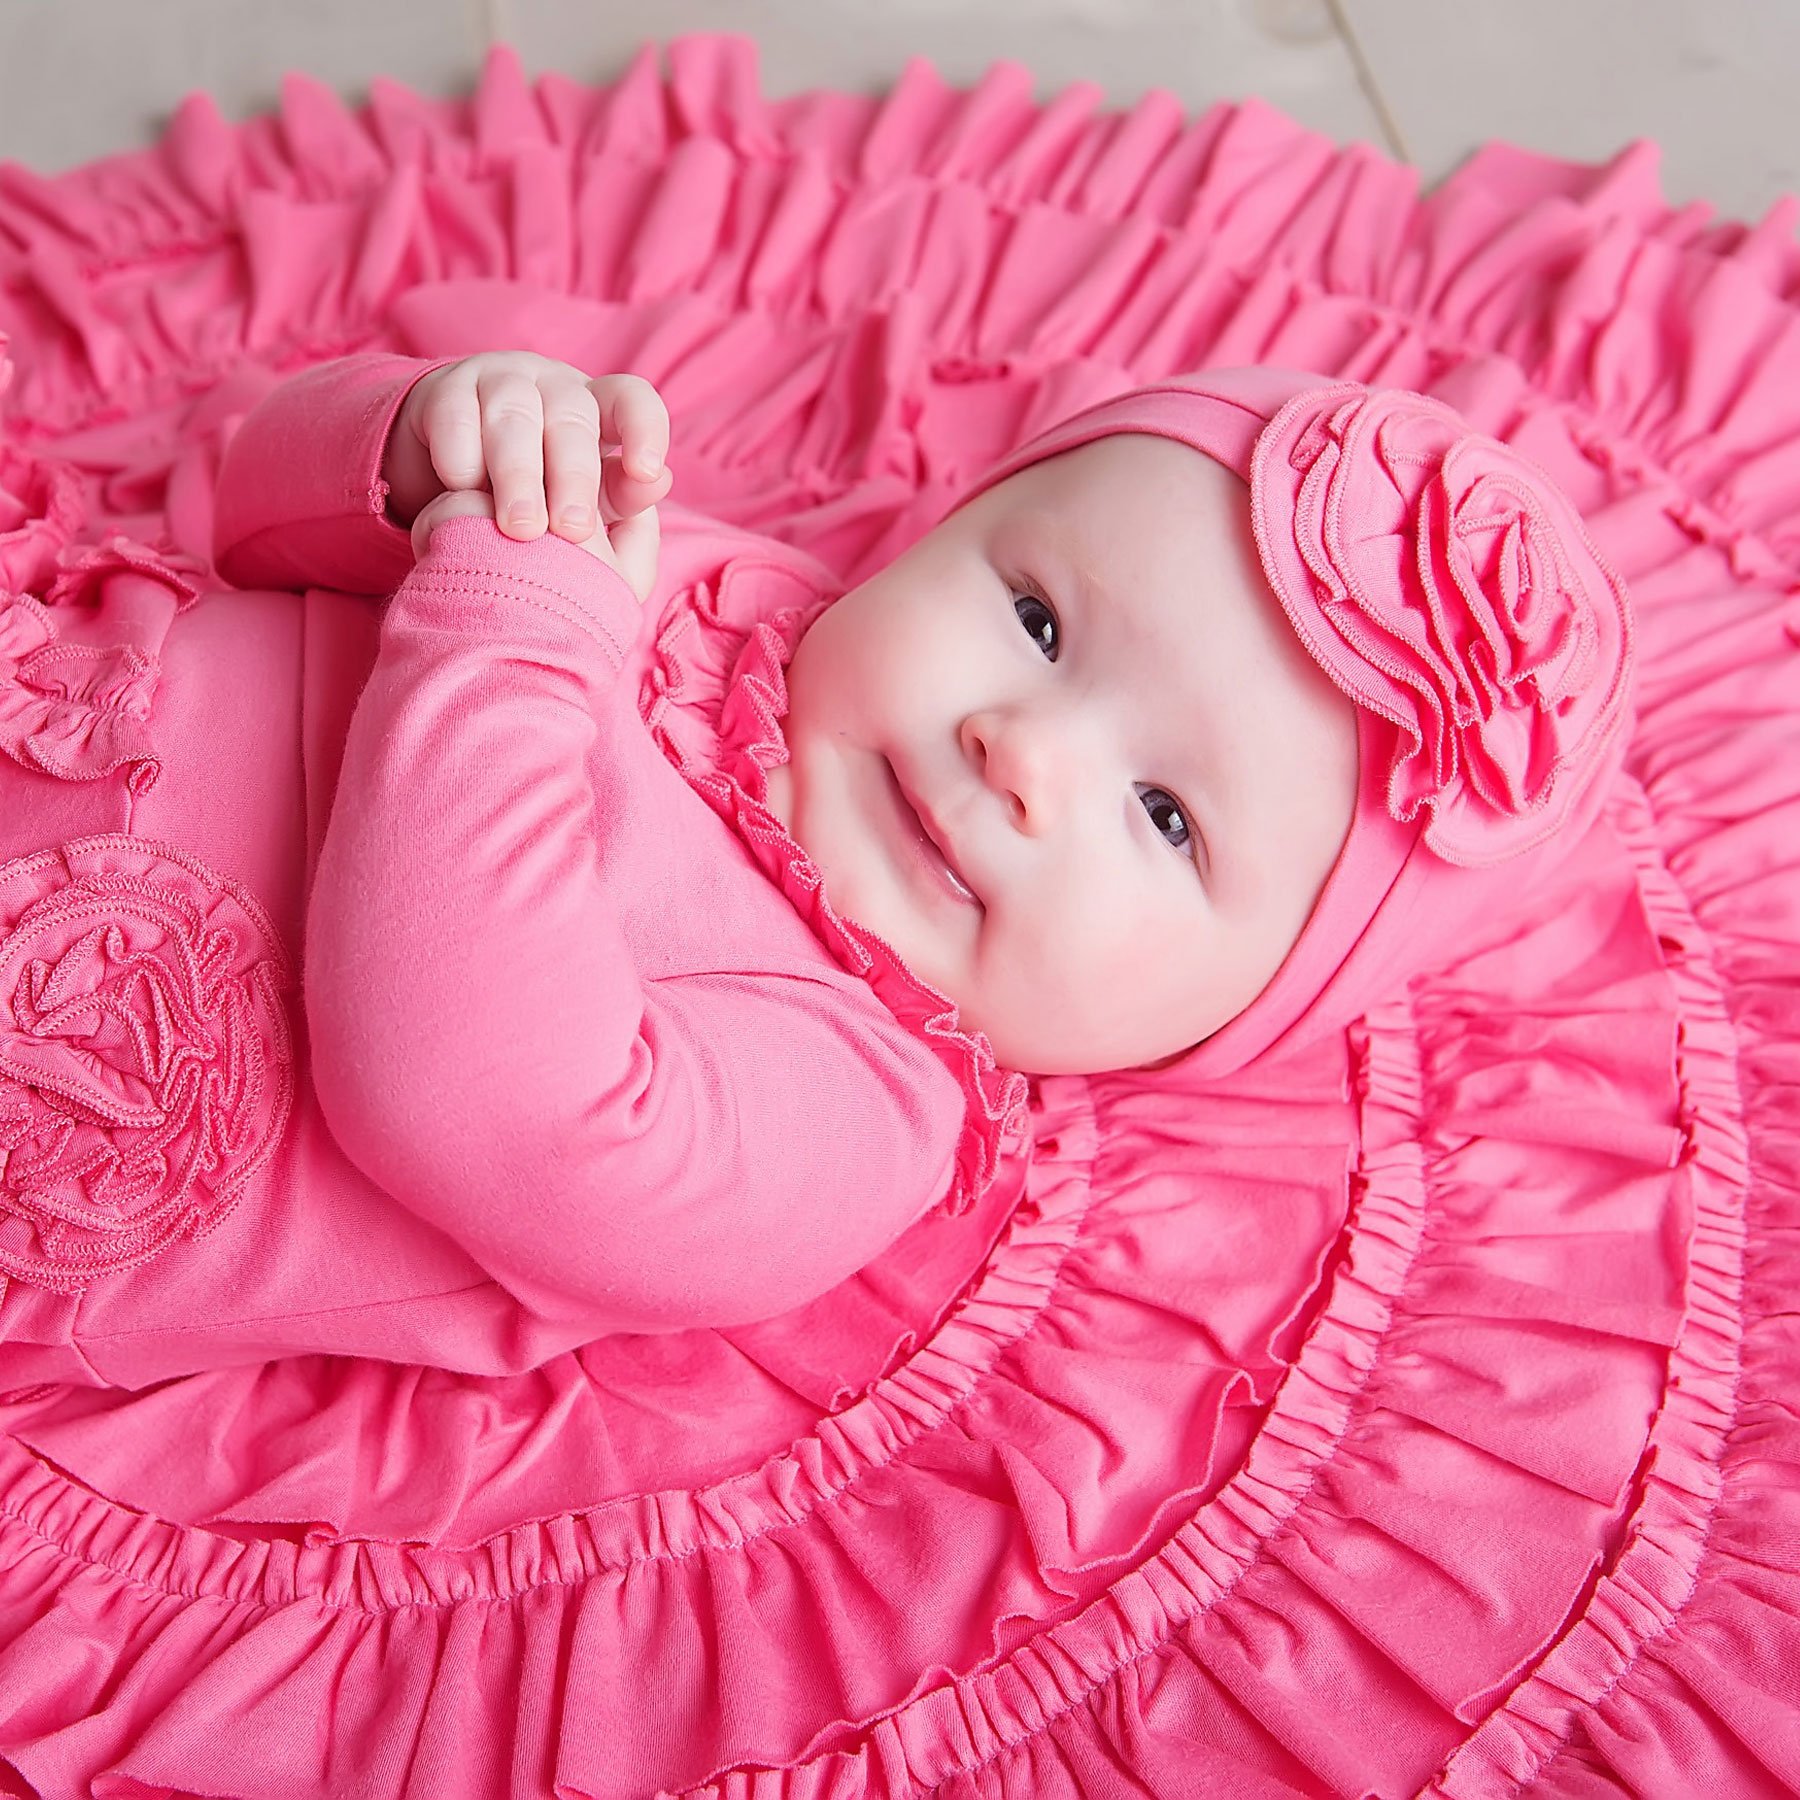 Lemon Loves Layette "Bijou" Hat for Newborn and Baby Girls in Pink Lemonade